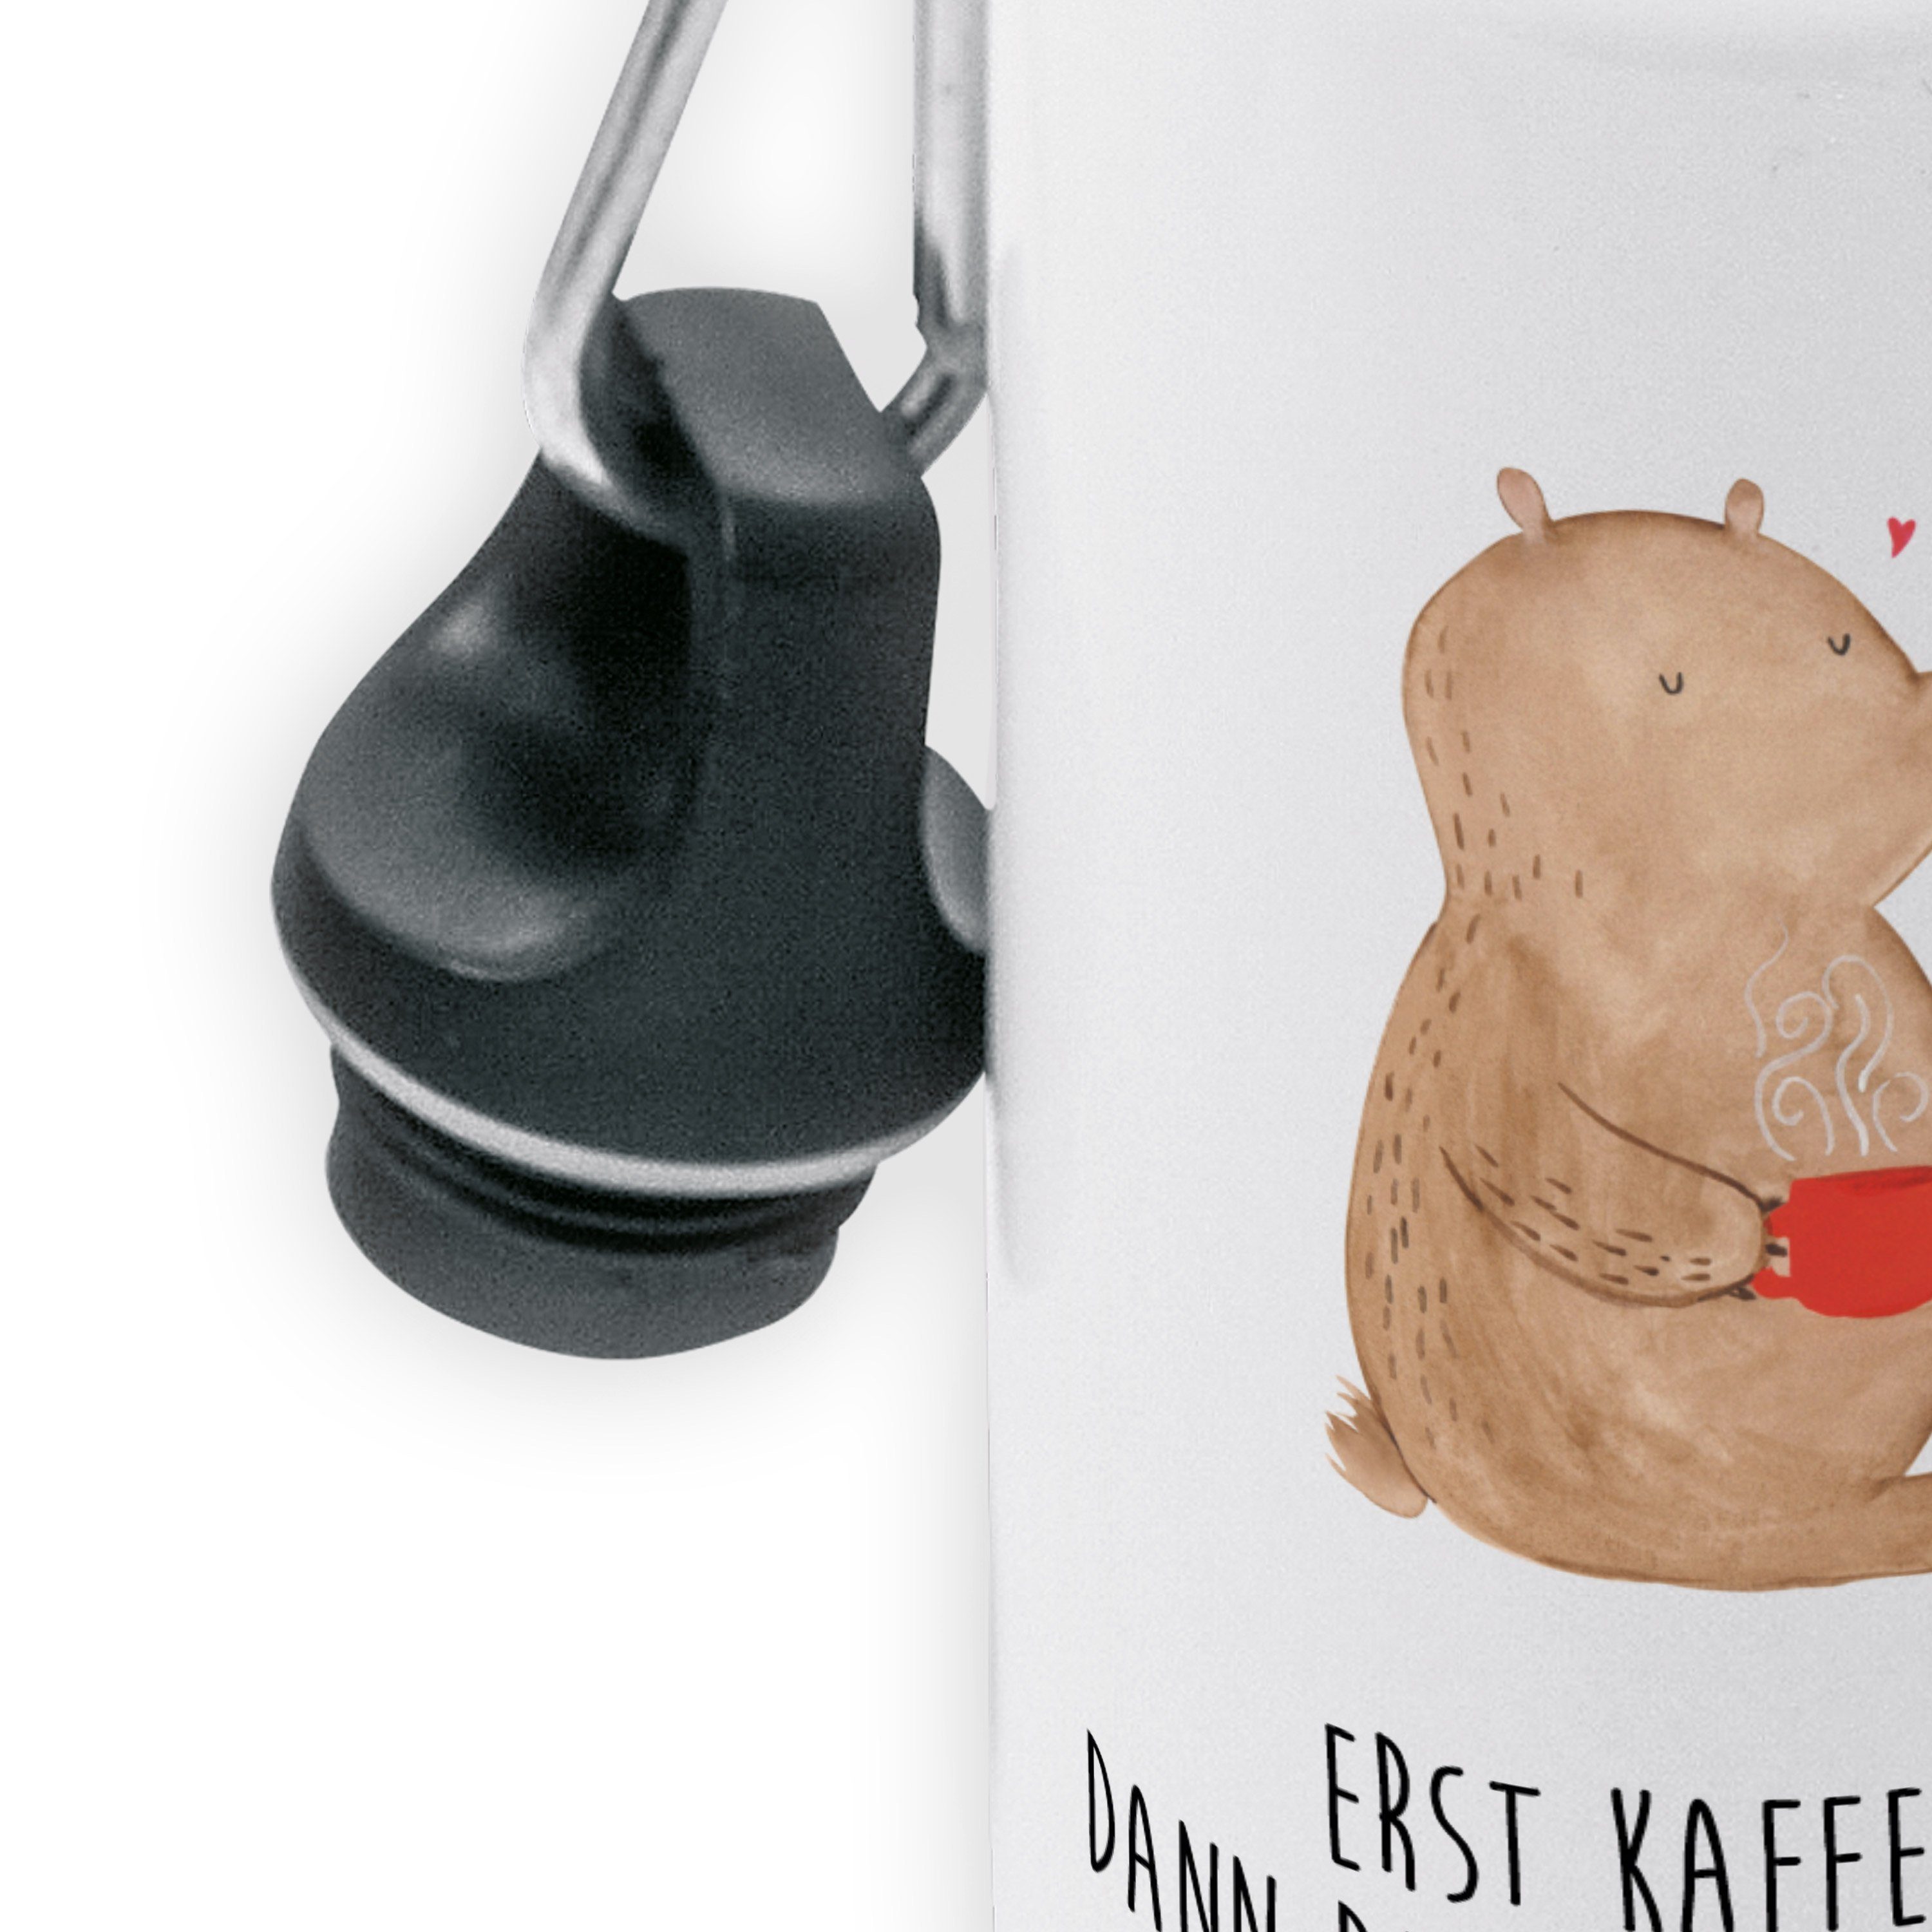 Mr. Bär Bären, Flasche, - Geschenk, Trinkflasche Kaffee Kindergarten Grundschul Weiß Mrs. Panda & -